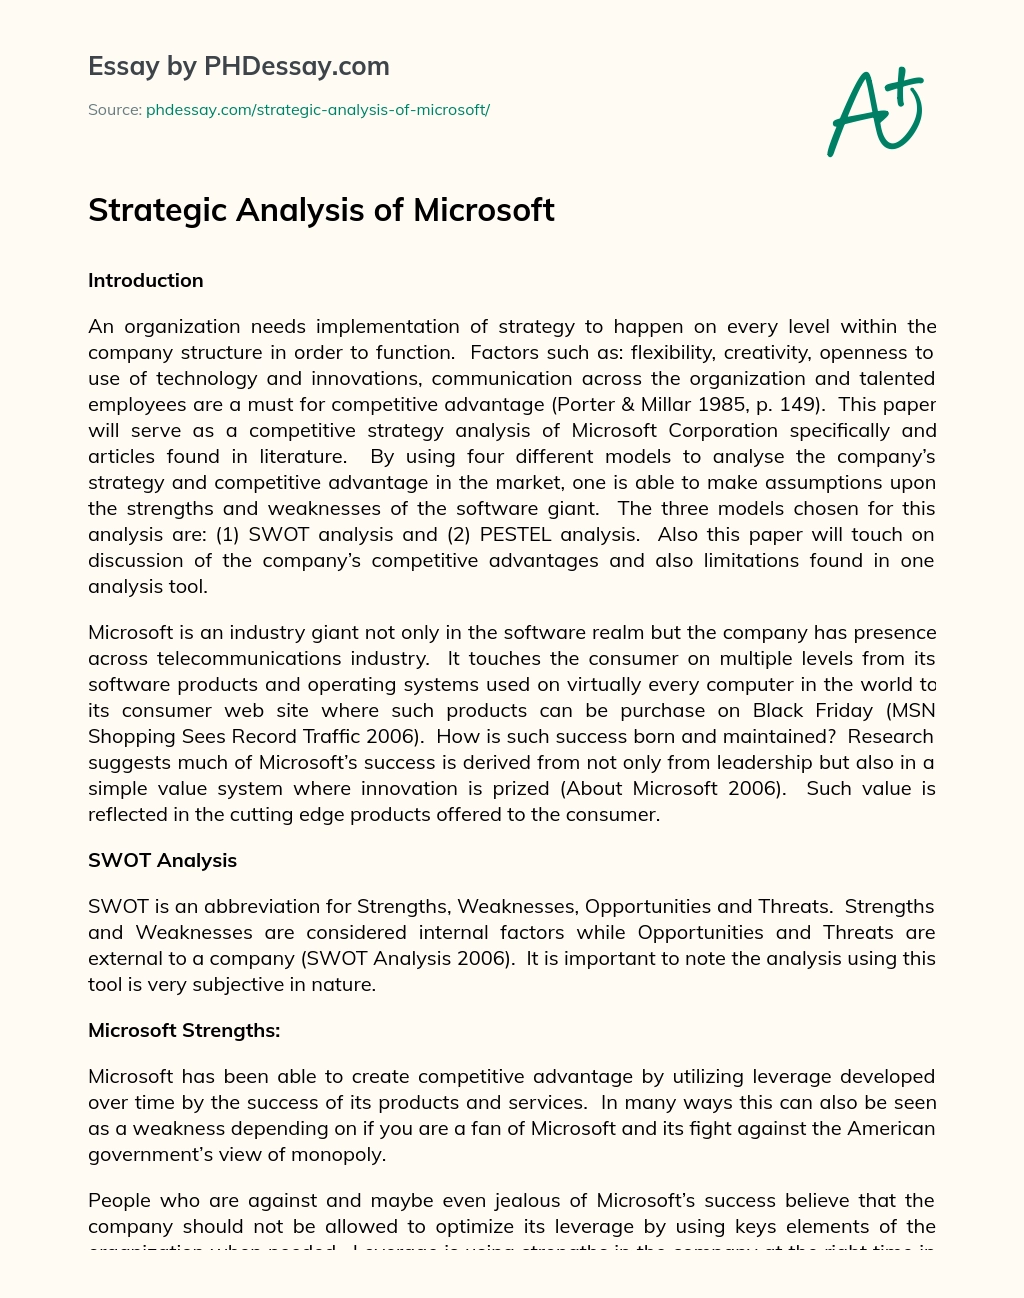 Strategic Analysis of Microsoft essay